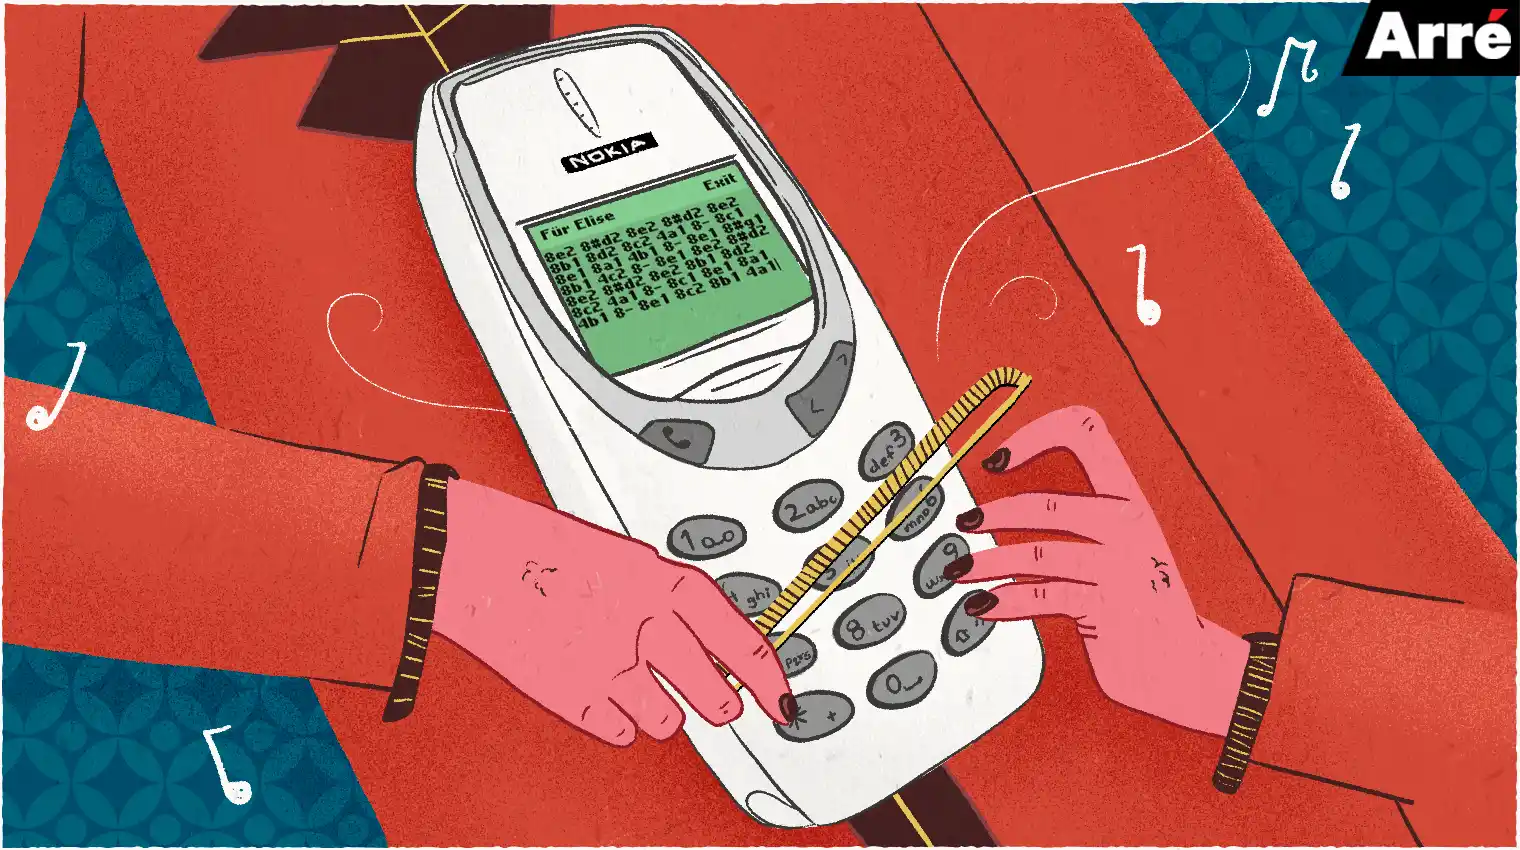 The Lost Art of Composing Ringtones on Nokia Phones